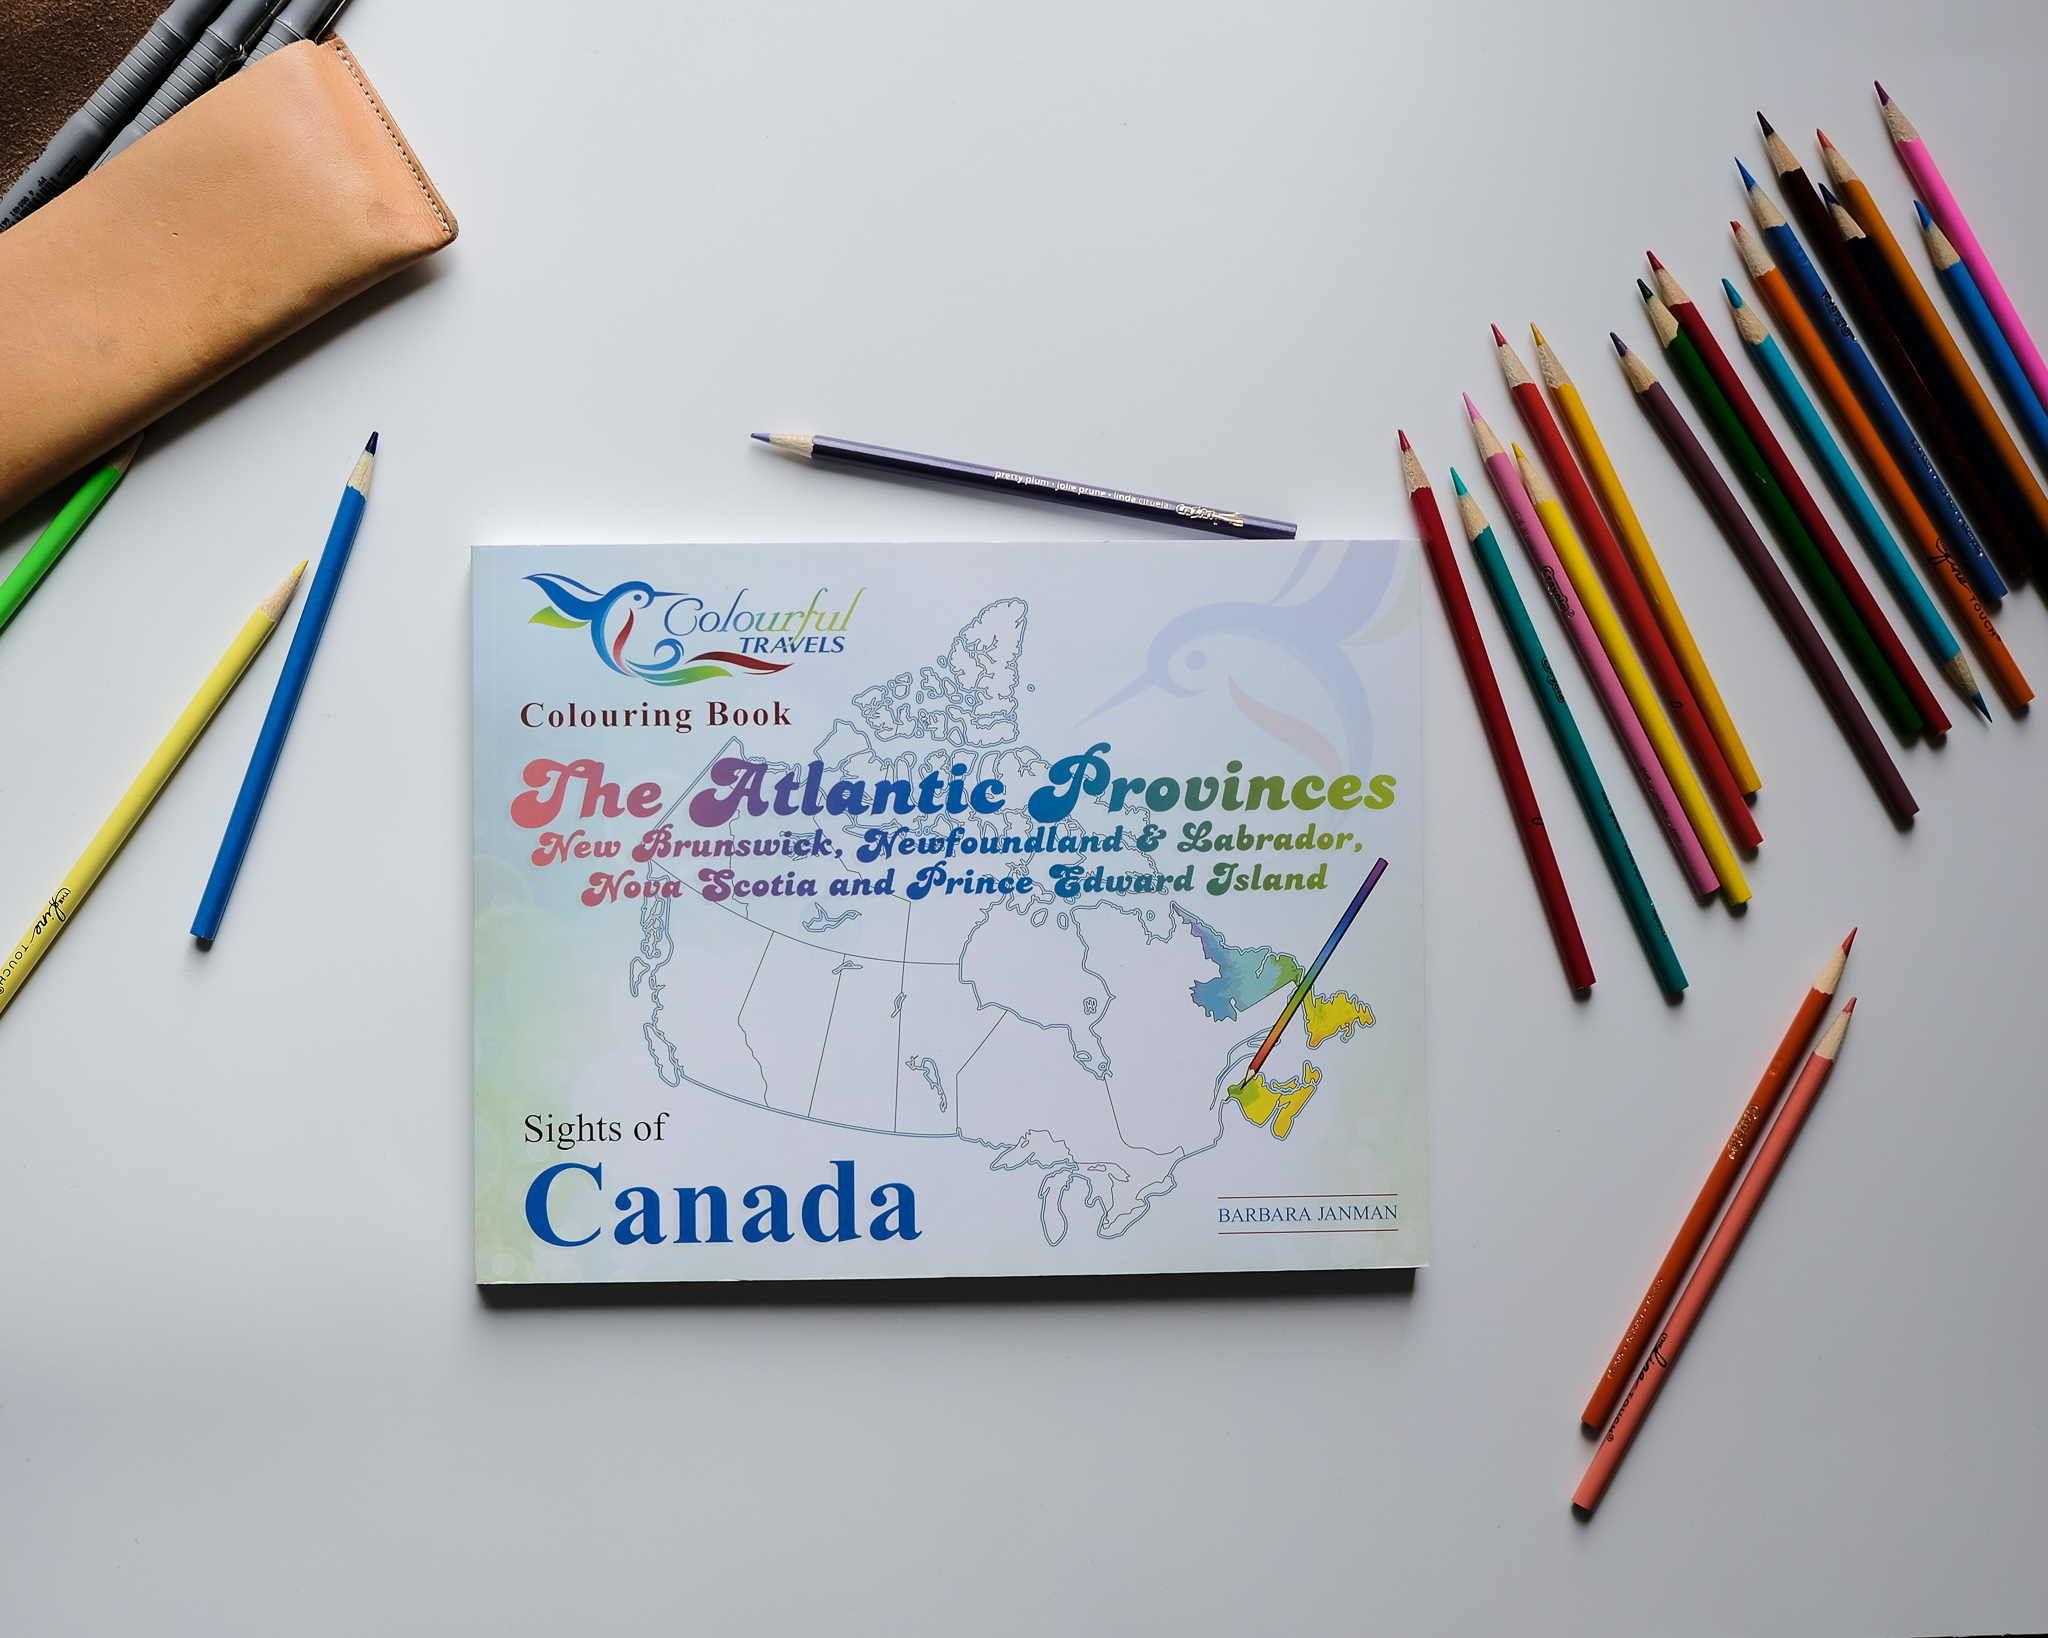 The Atlantic Provinces - Sights of Canada